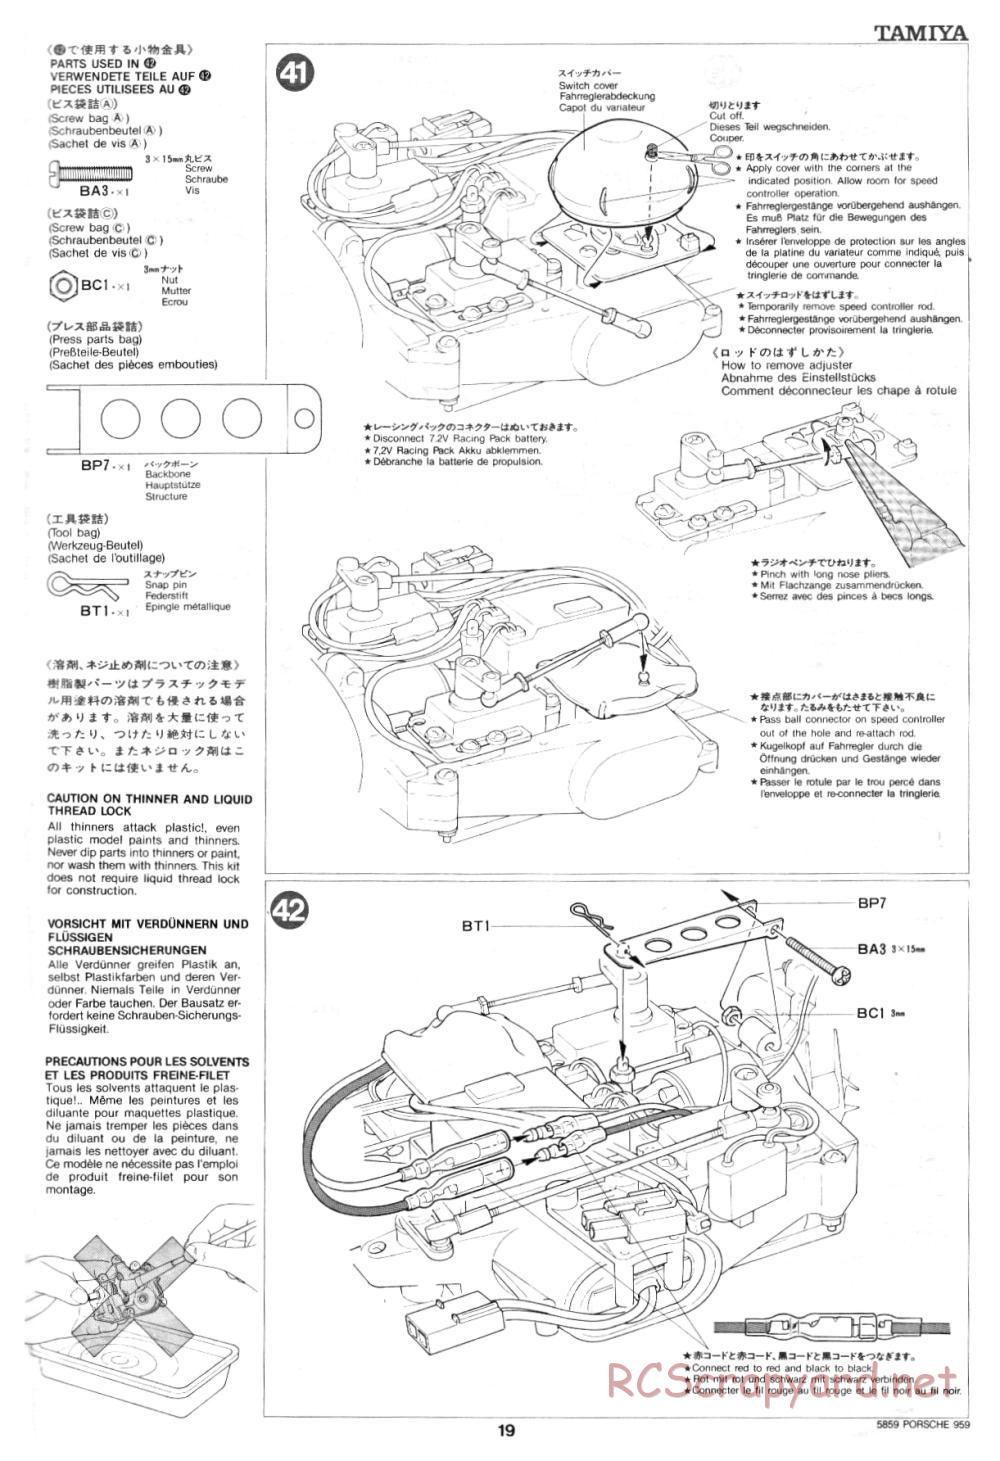 Tamiya - Porsche 959 - 58059 - Manual - Page 19